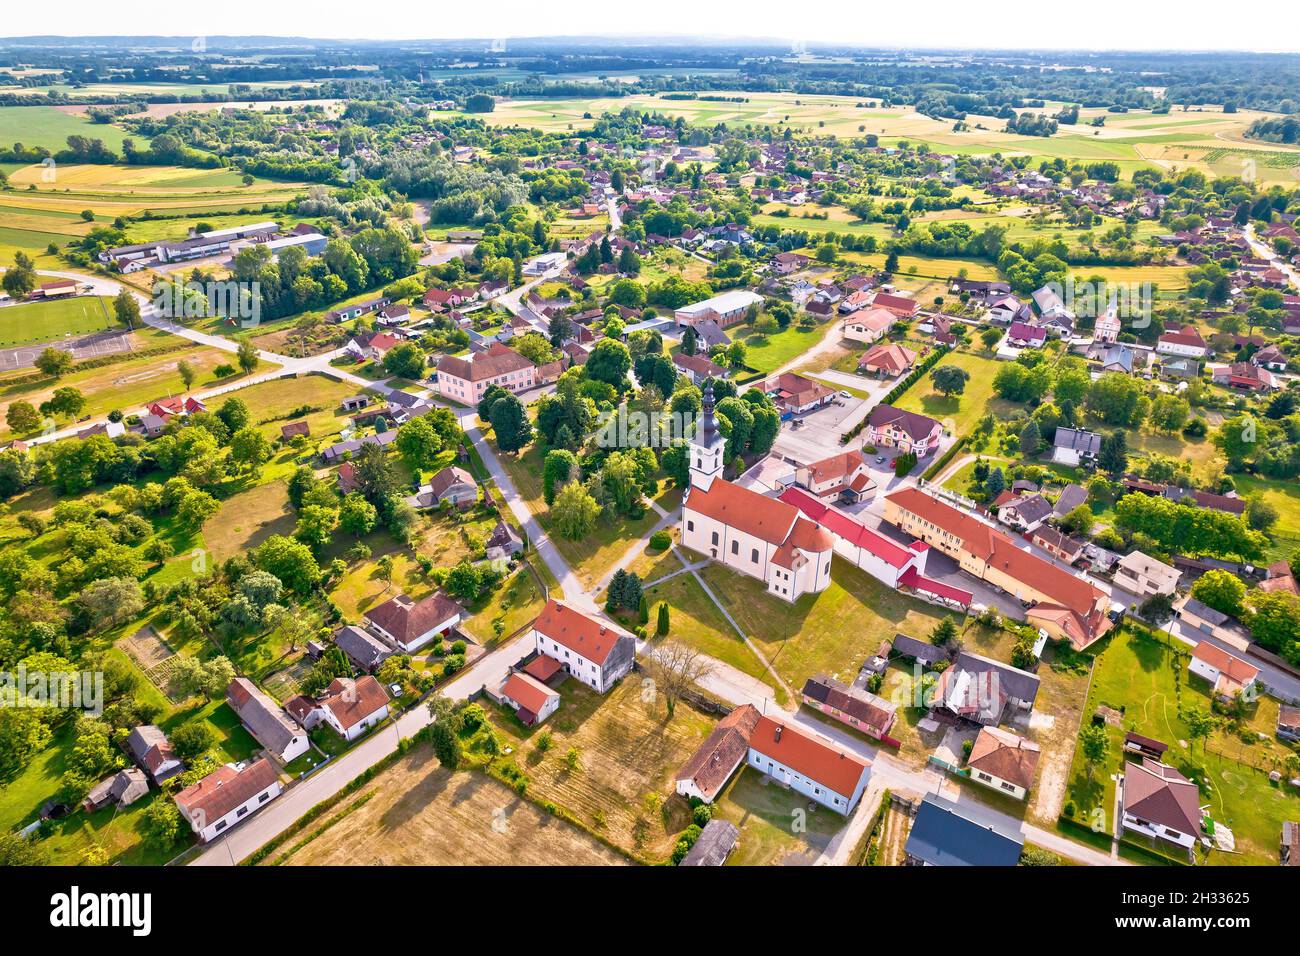 Village of Legrad church and green landscape aerial view, Podravina region of Croatia Stock Photo